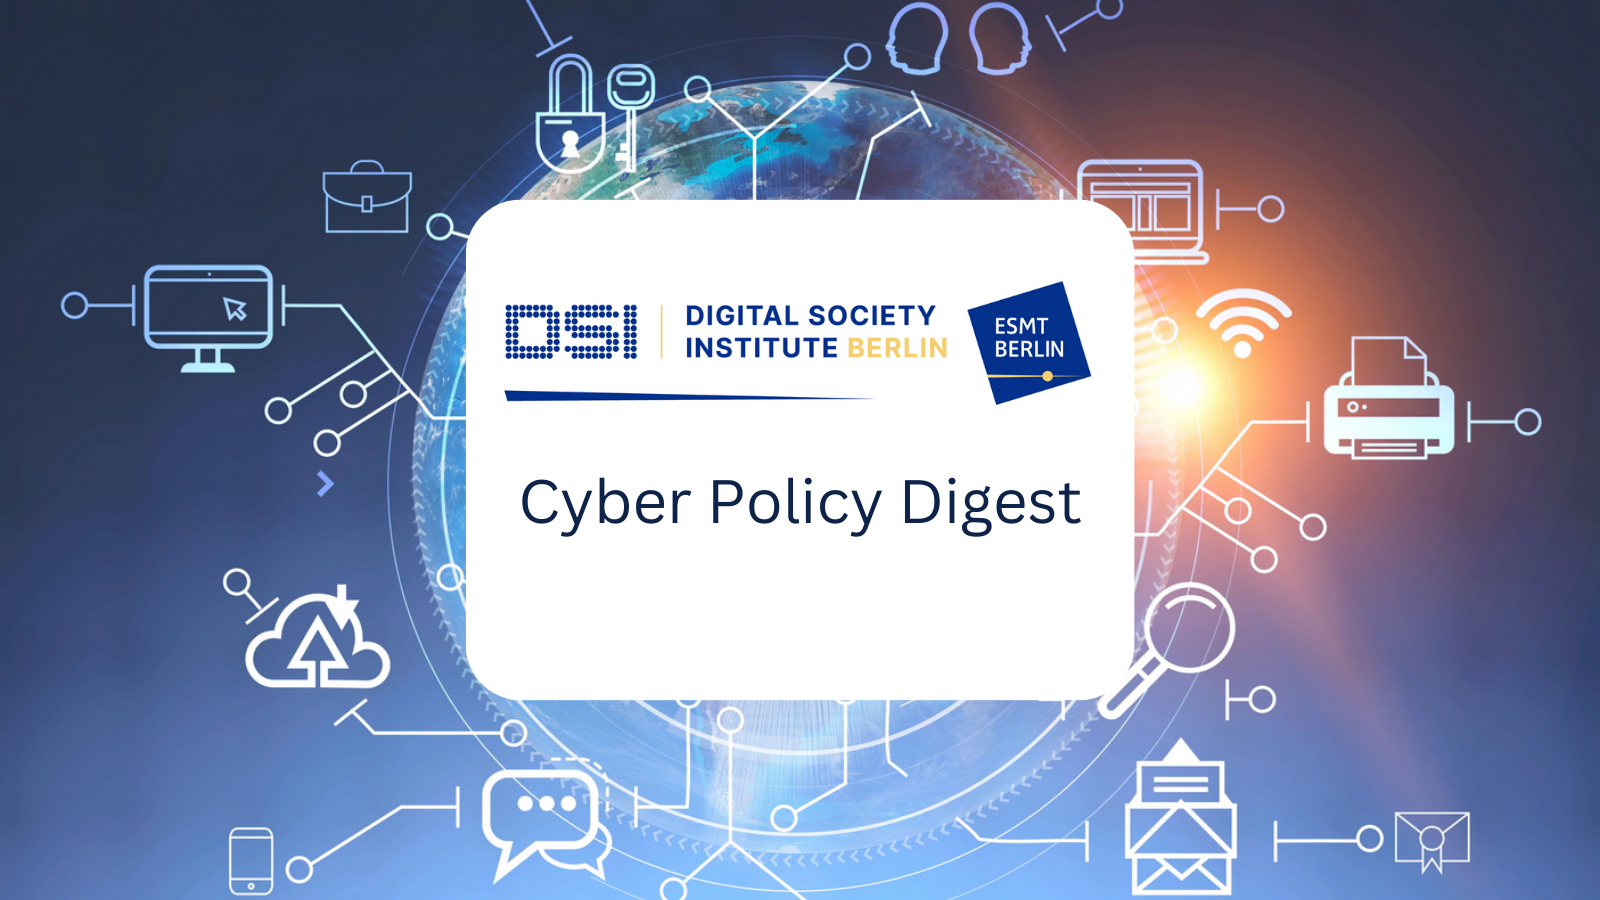 DSI Cyber Policy Digest